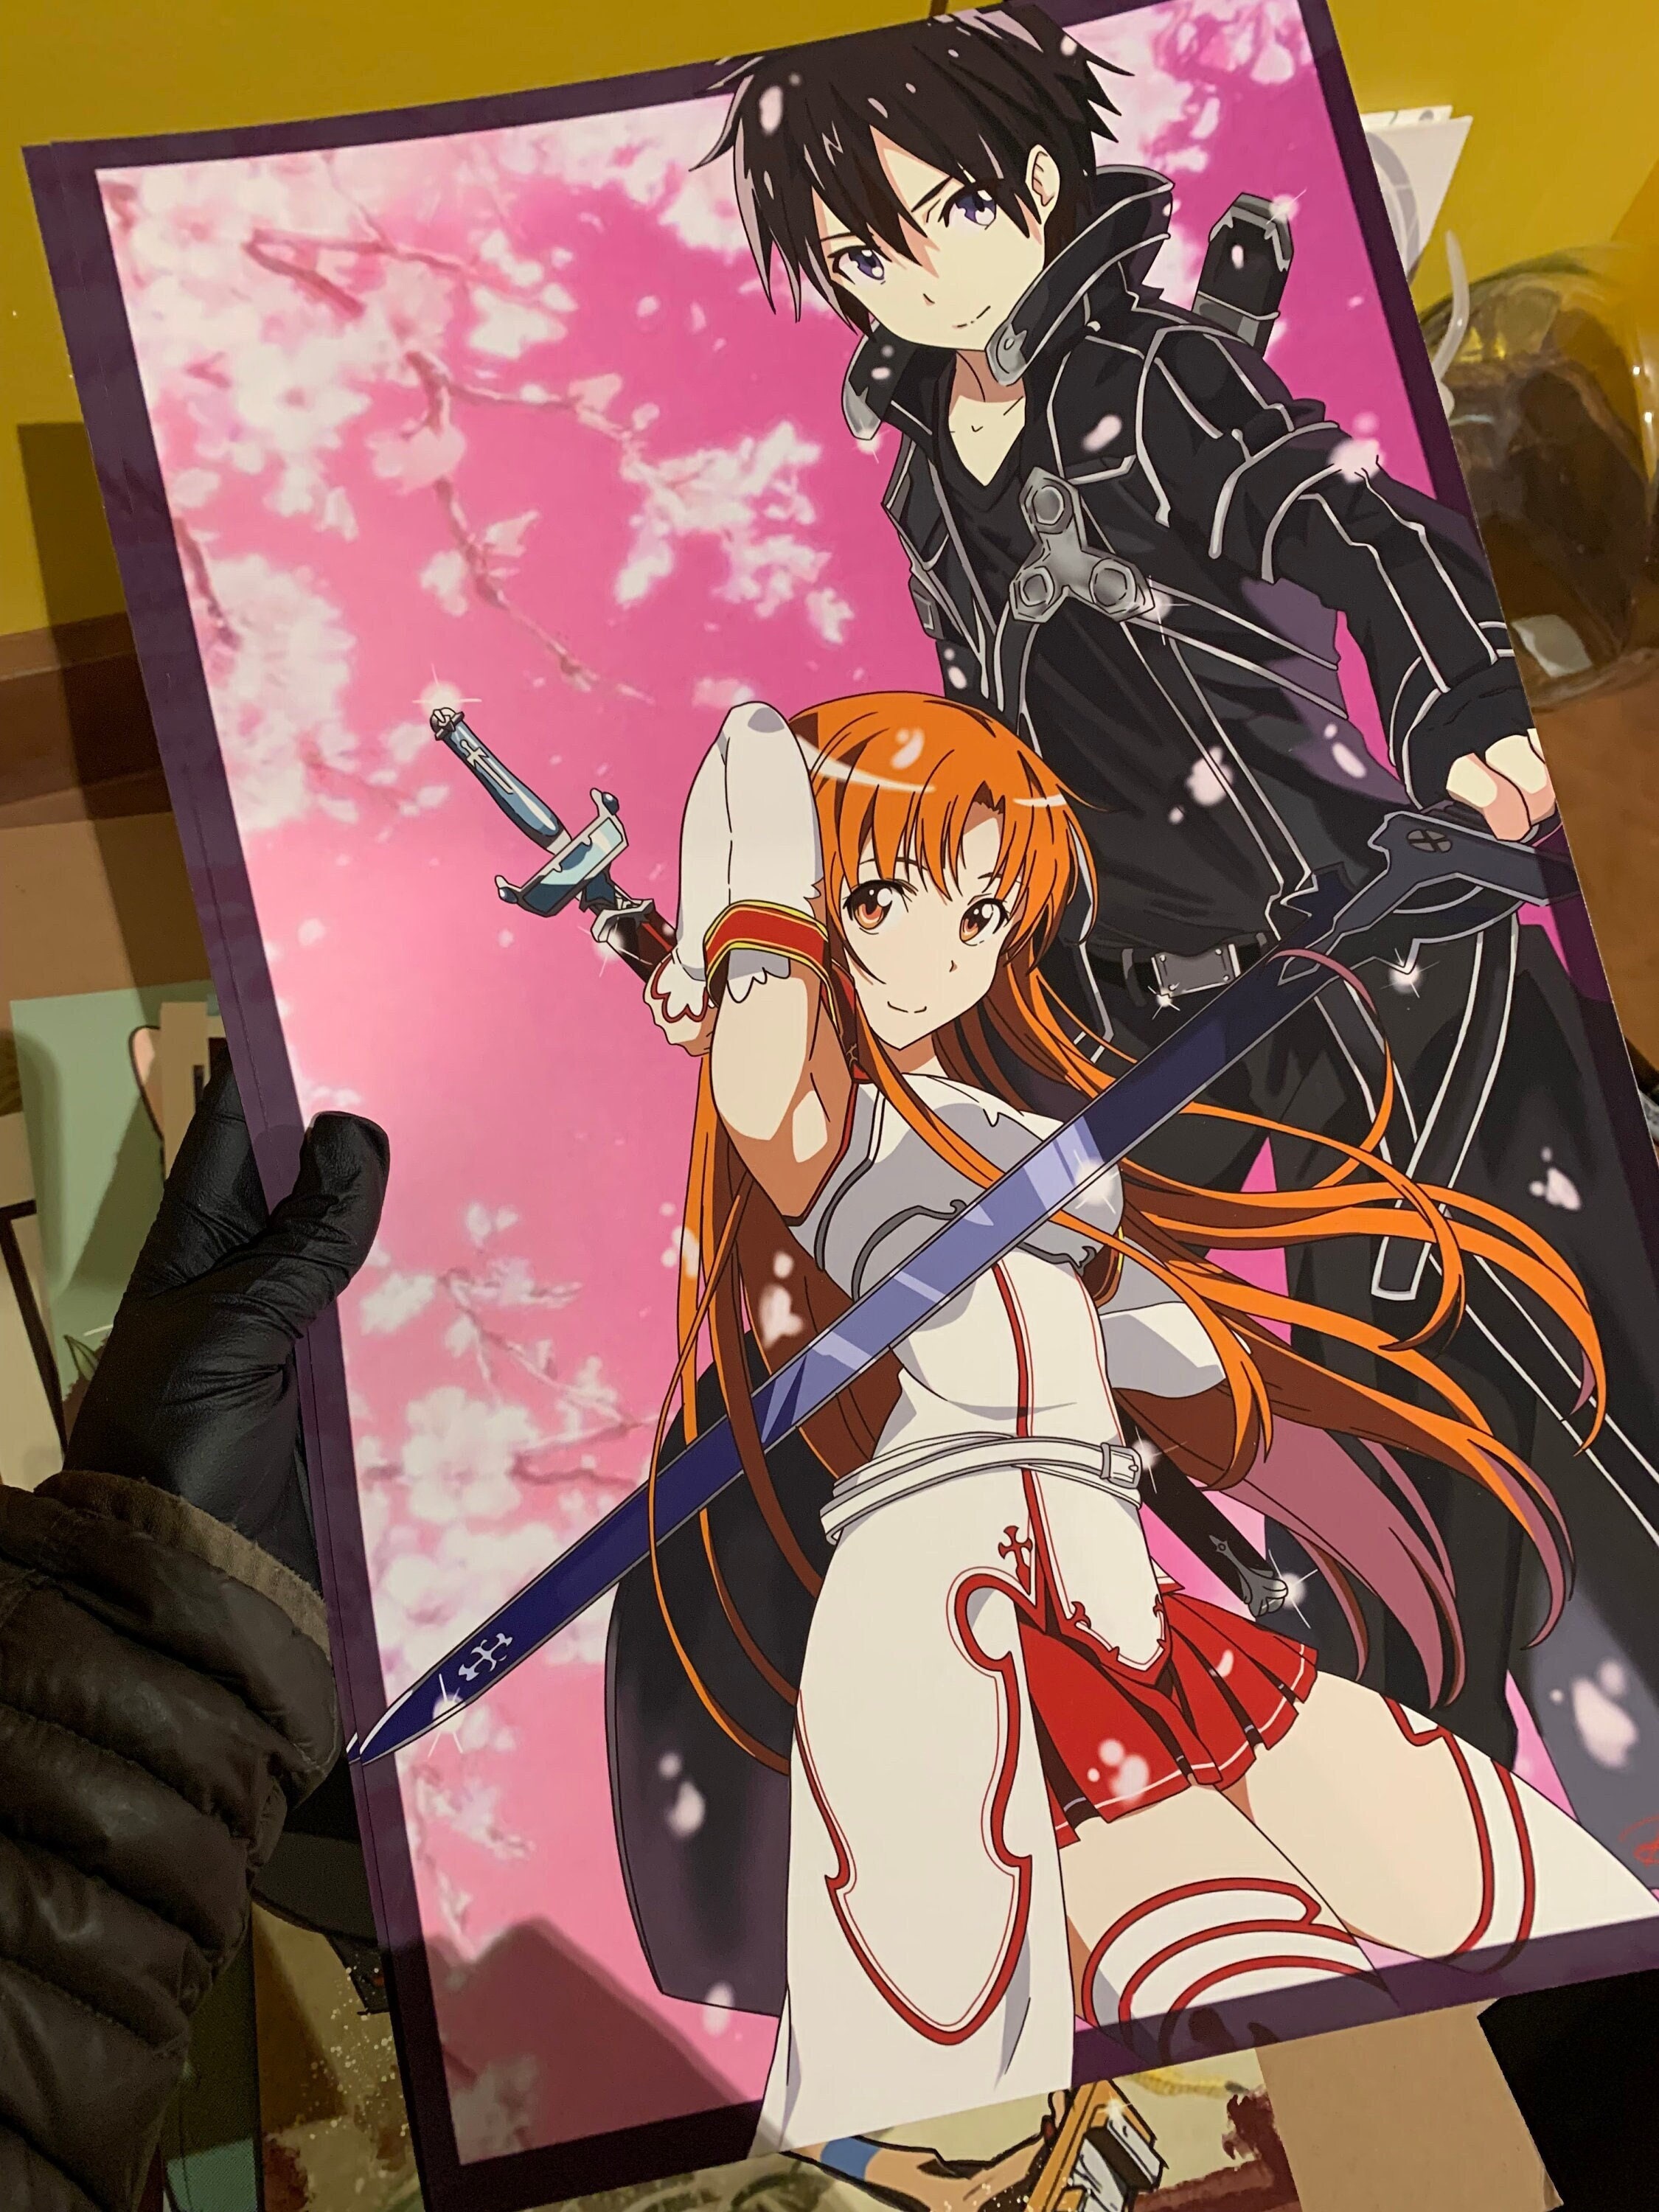  Gryposaurus Sword Art Online Sao Kirito Asuna Anime Poster 18 ×  24 Inches: Posters & Prints